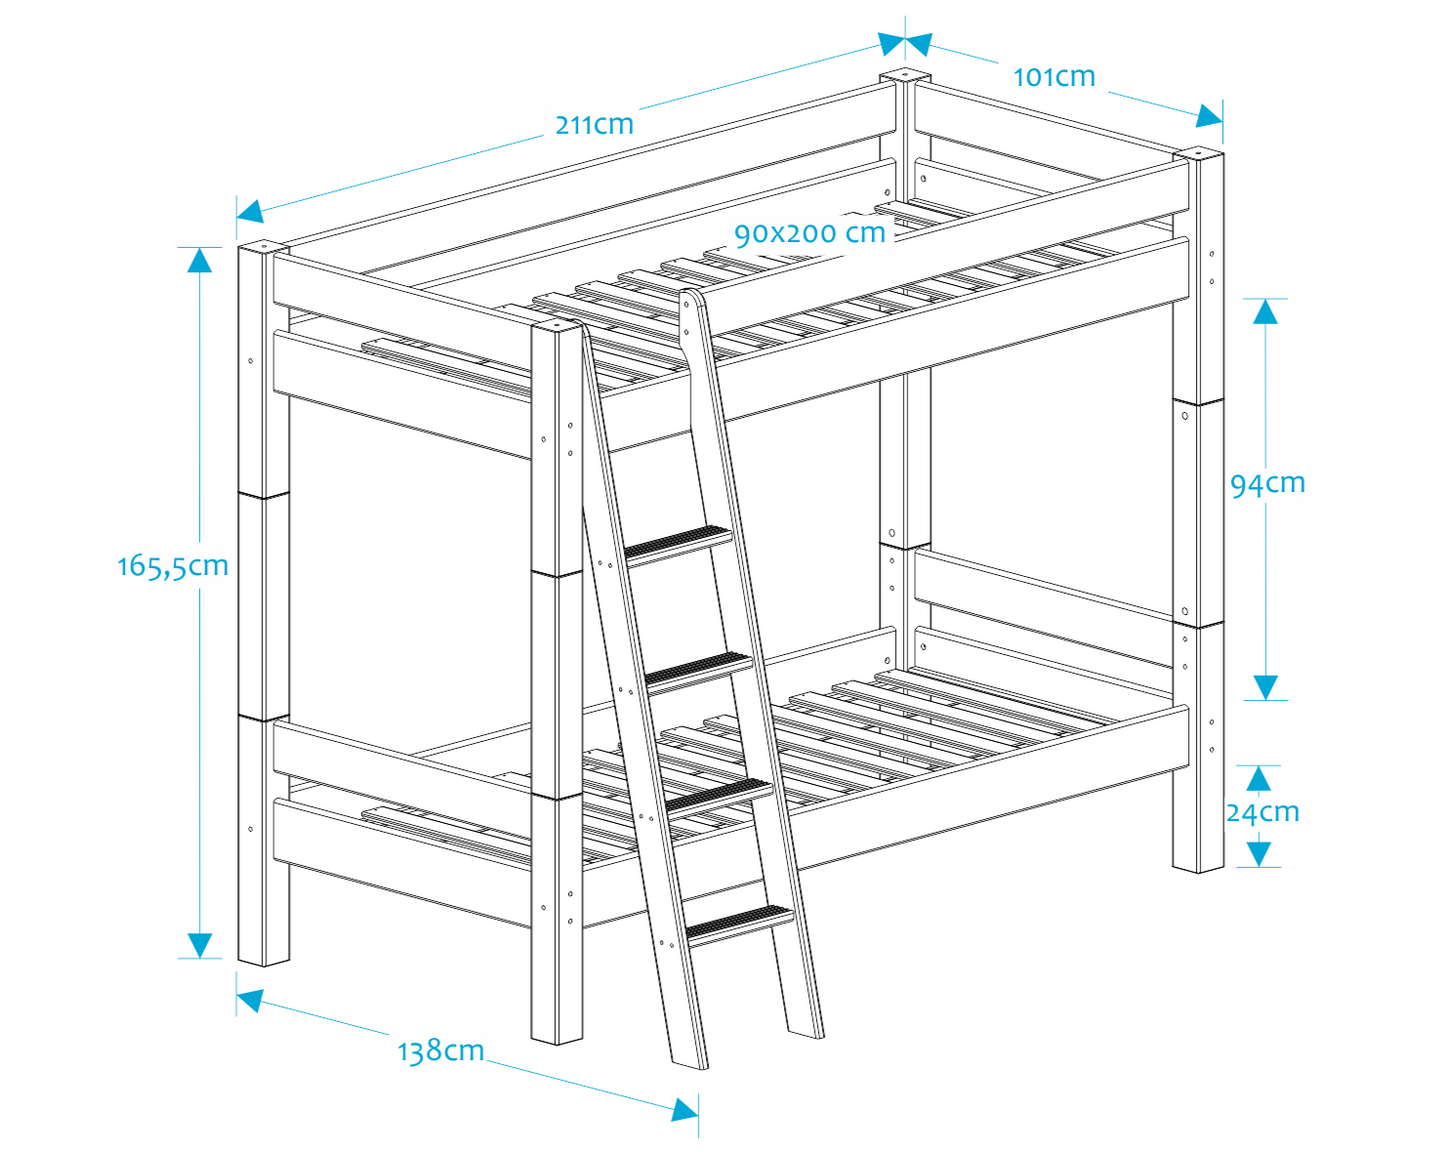 Lahe - Bunk bed with slant ladder - 90x200 cm - White